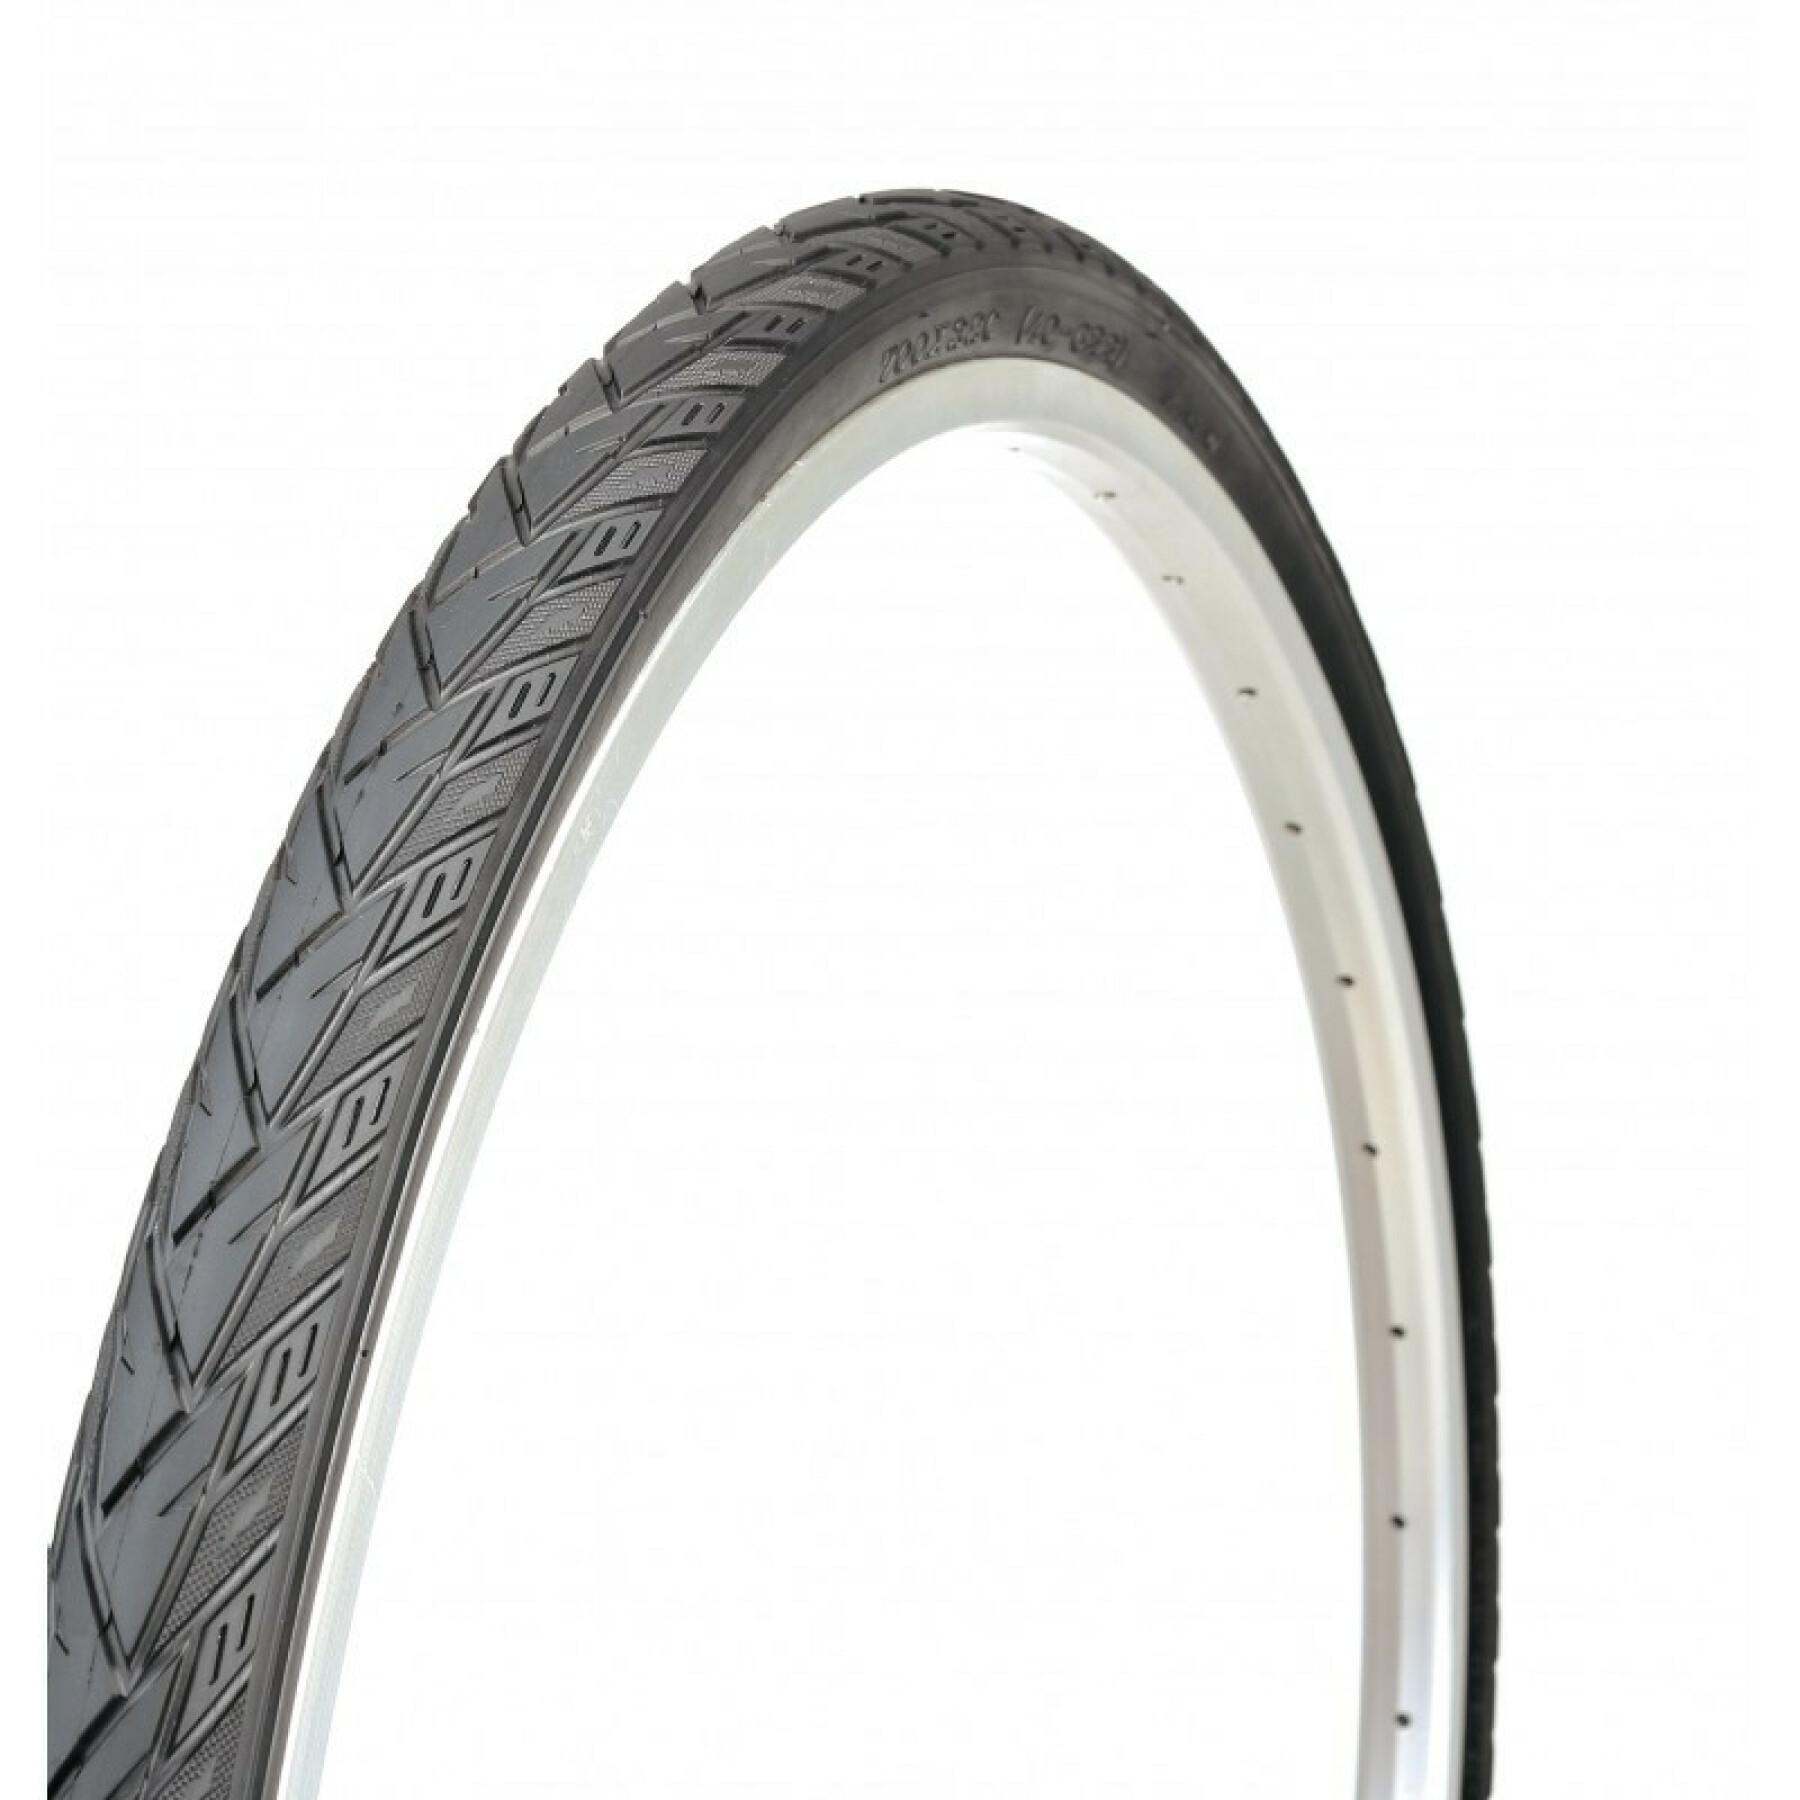 Vtc cross 700x38c tire with flexible ribs Bike Original